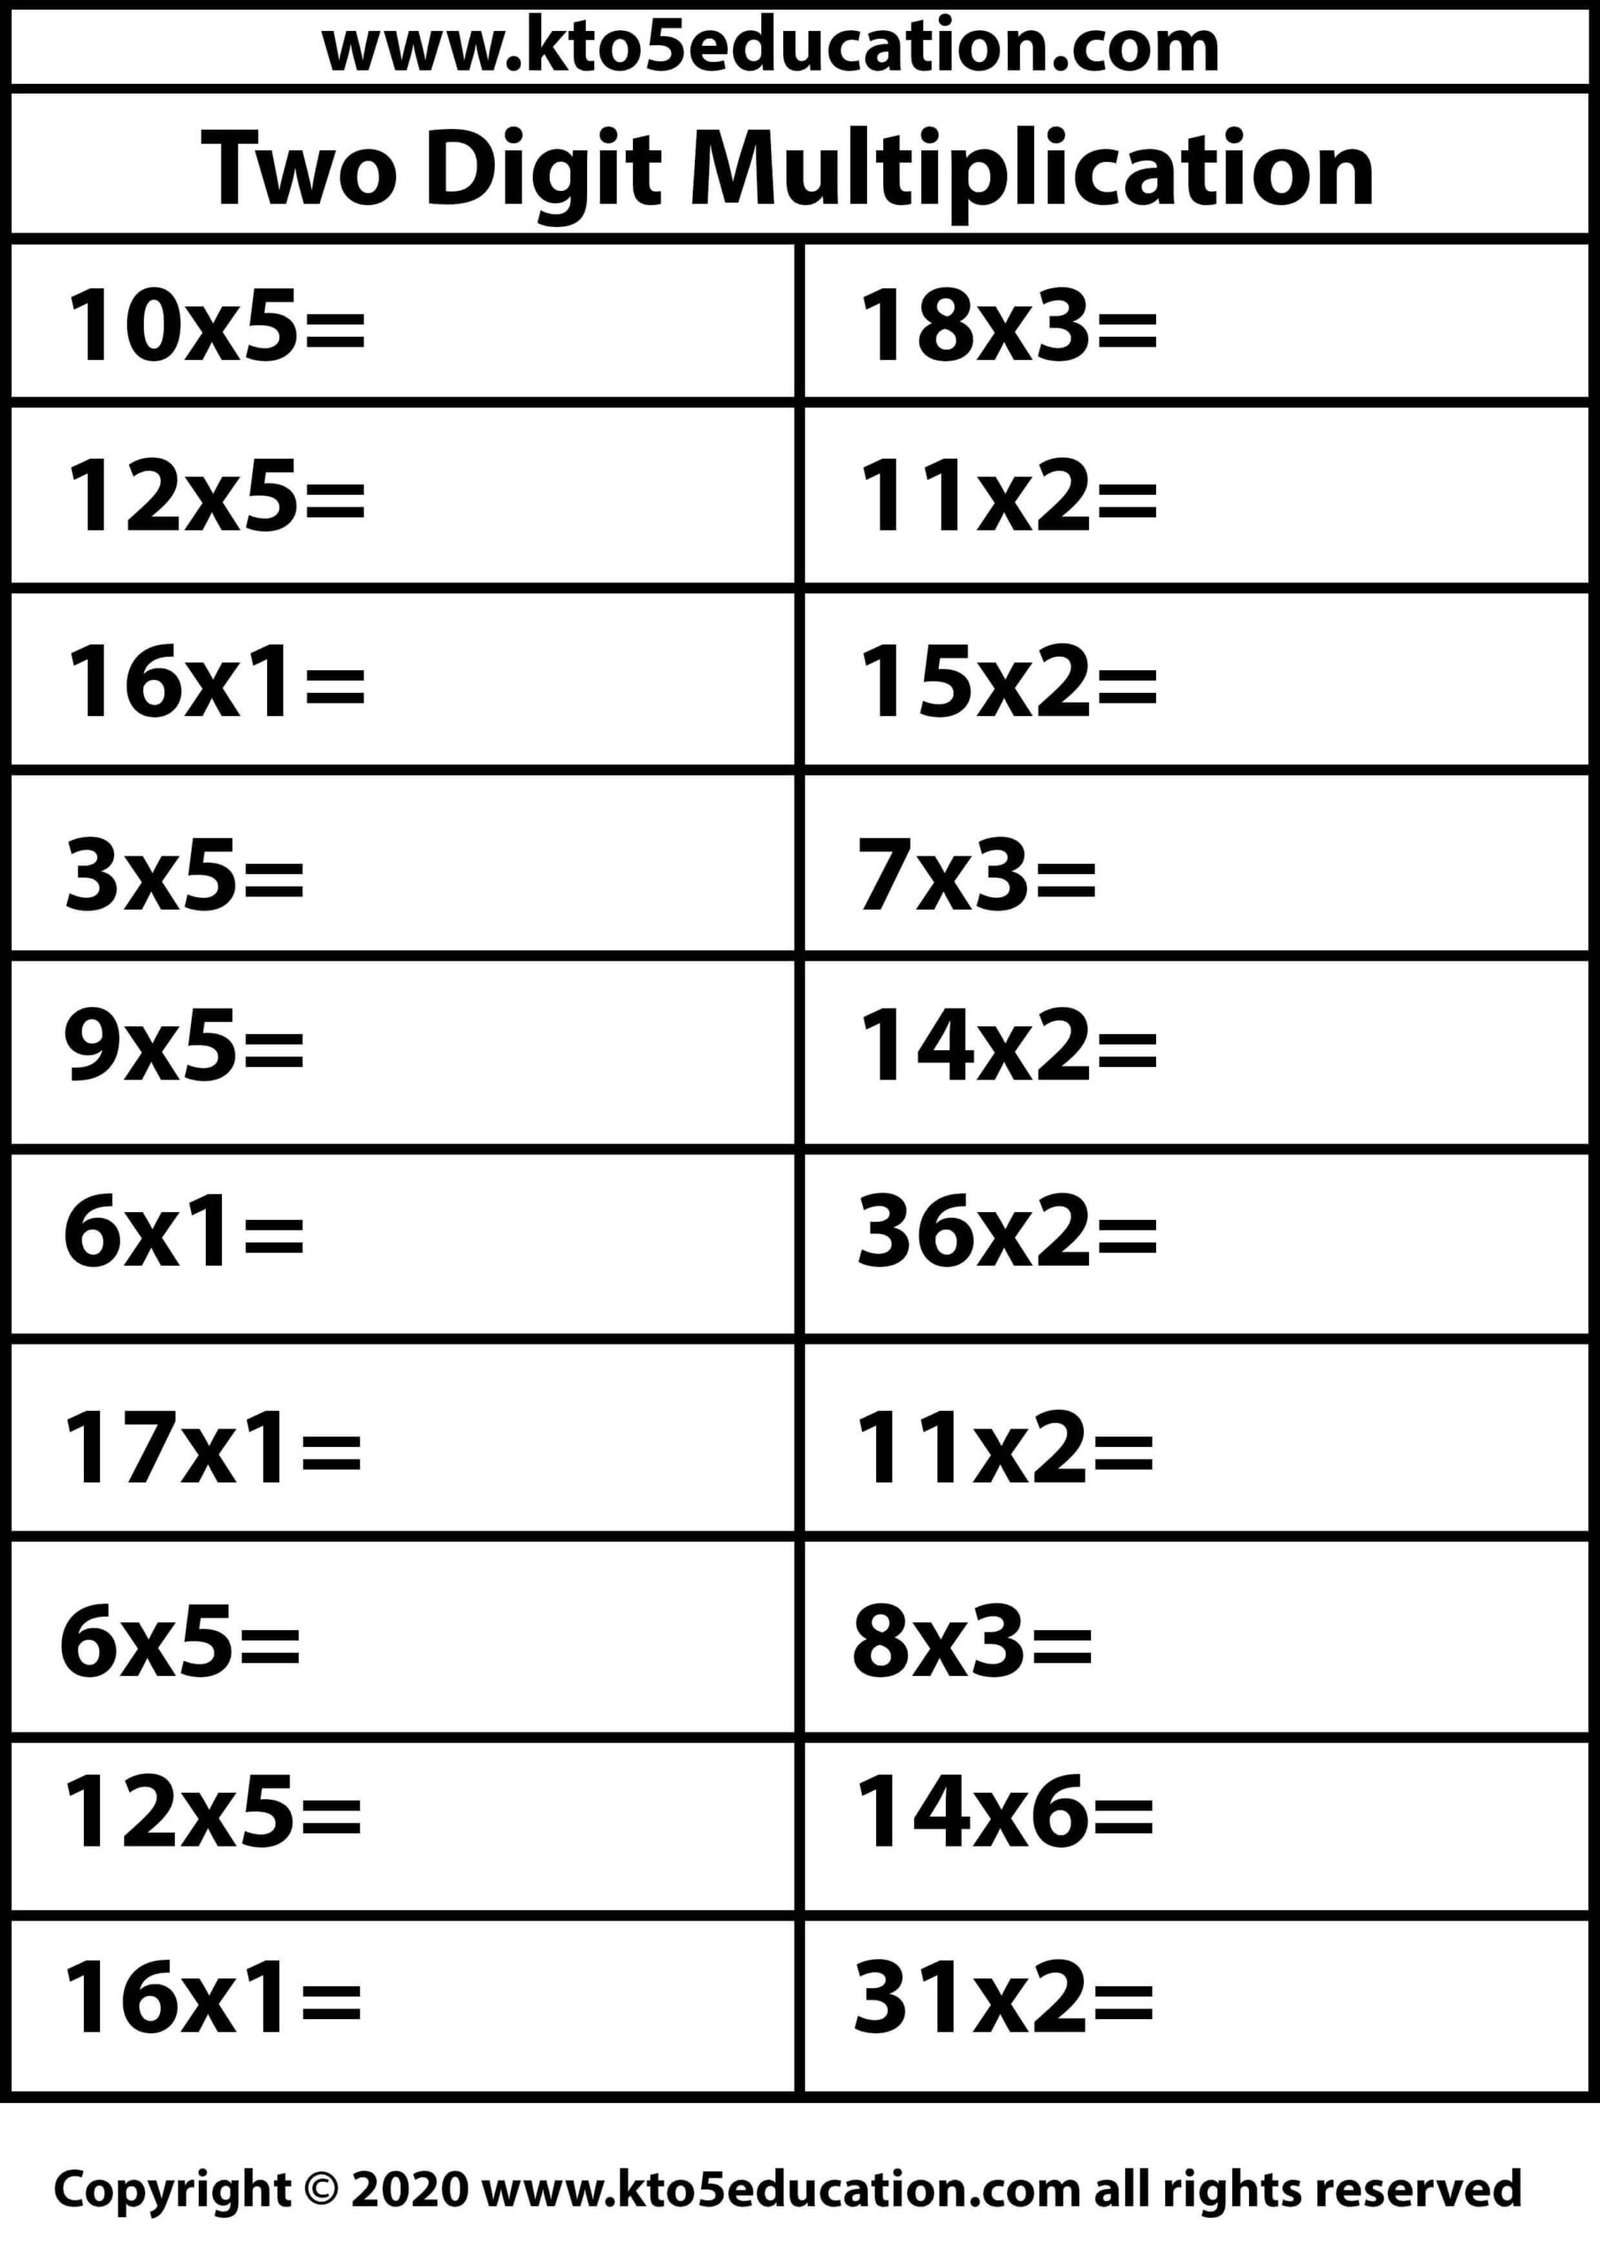 Two Digit Multiplication Worksheet 1